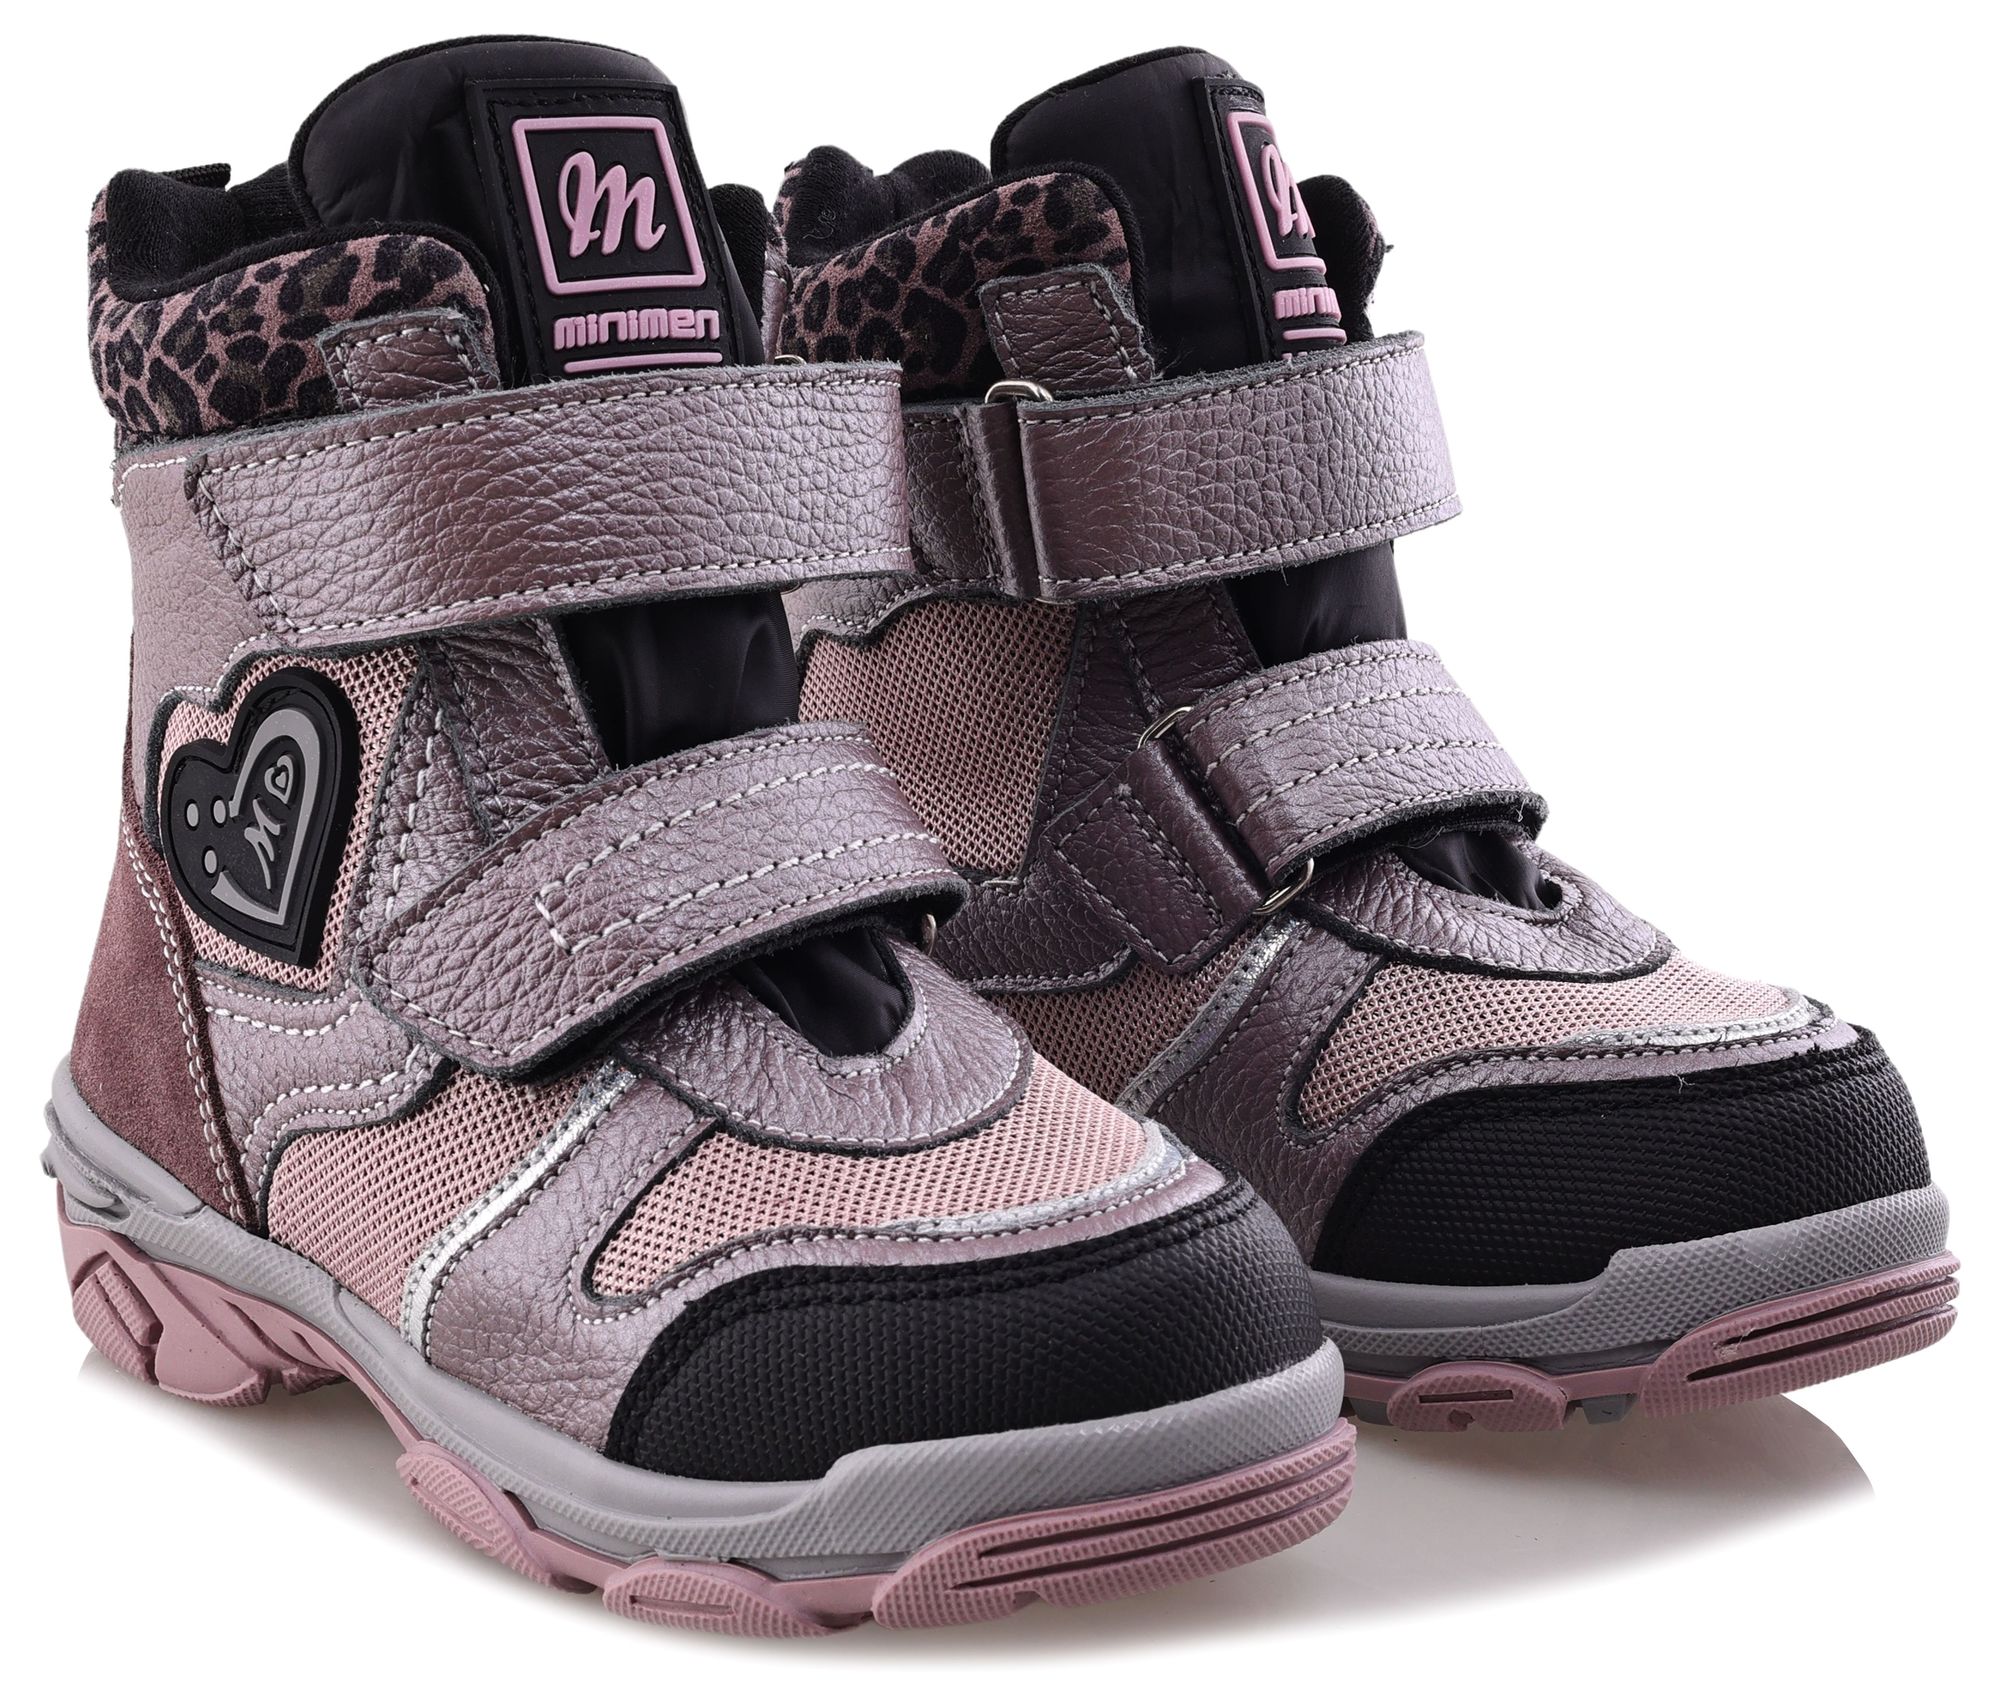 Ботинки Minimen для девочек, розовые, размер 29, 2656-53-23B-02 ботинки minimen для девочек розовые размер 27 2656 53 23b 02